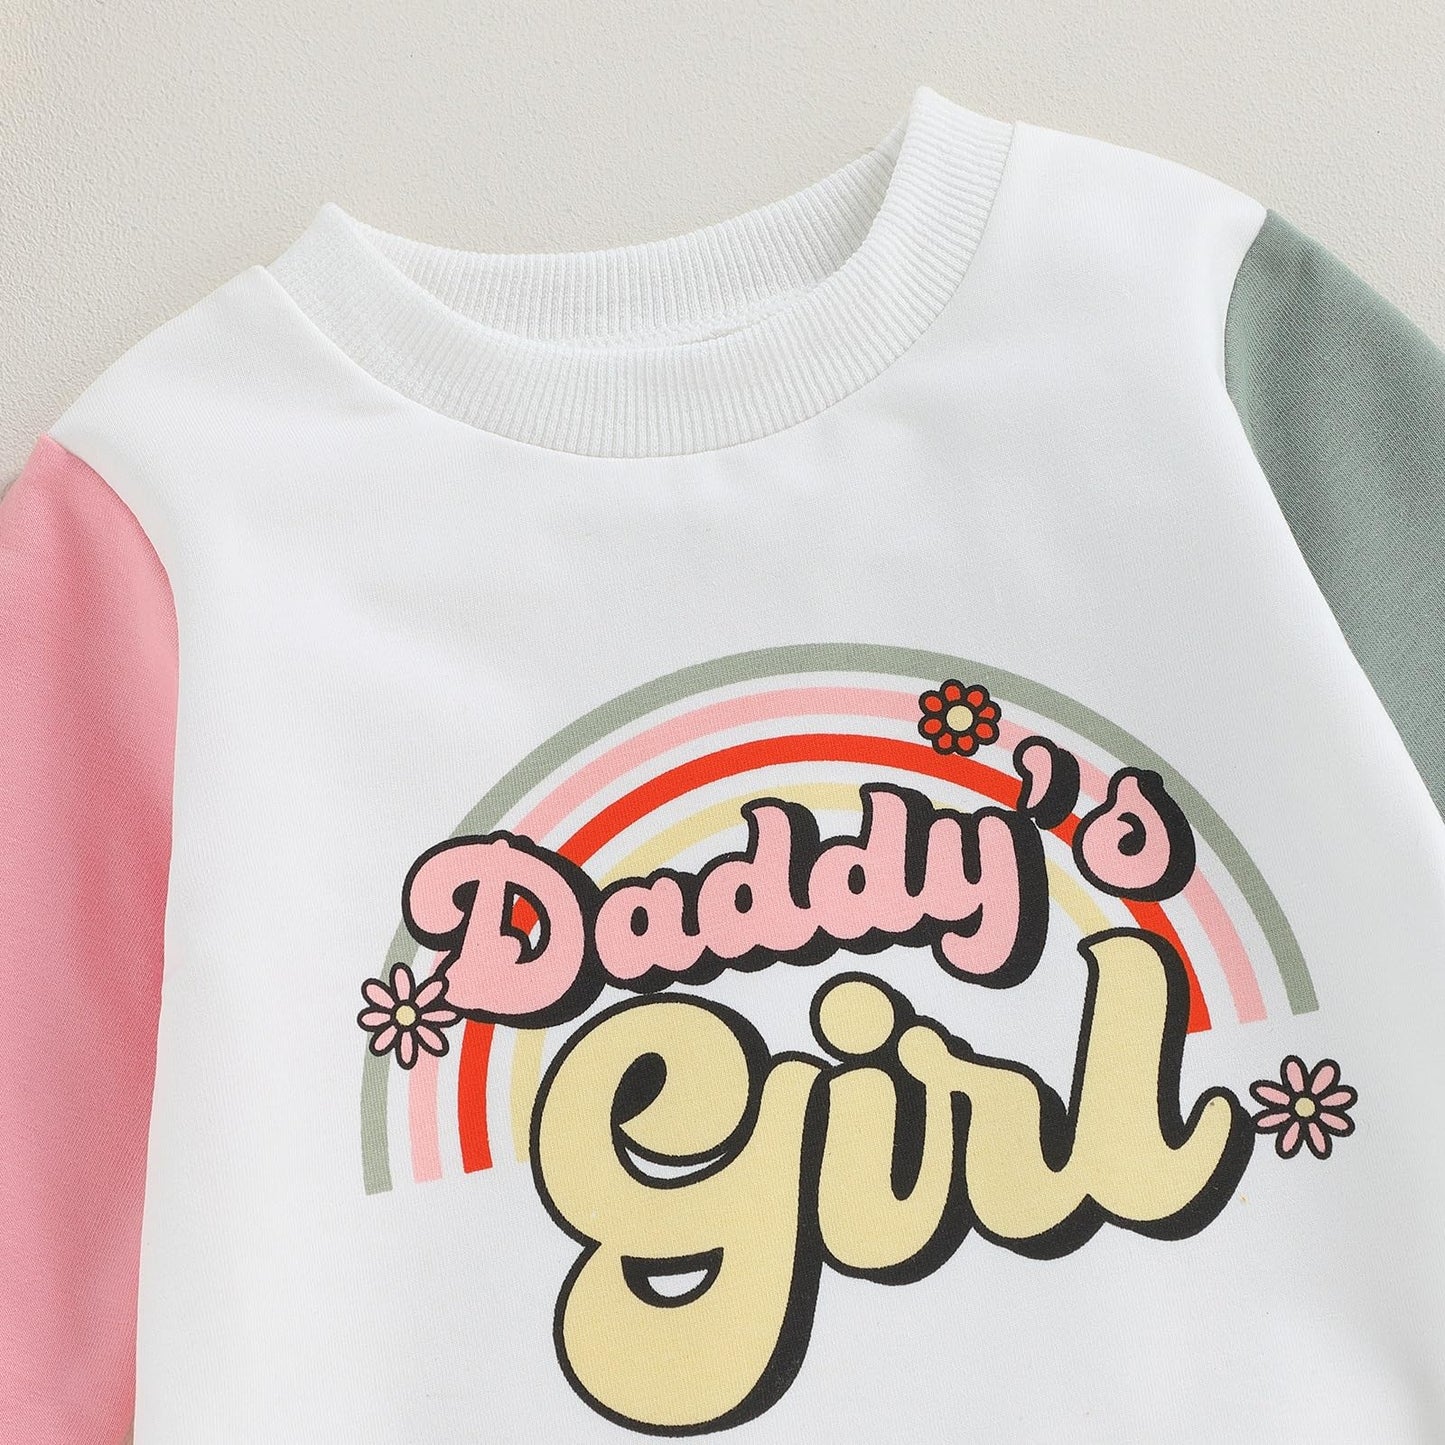 DuAnyozu Baby Girl Fall Clothes Newborn Oversized Sweatshirt Romper Color Block Crewneck Sweater Onesie Cute Outfit 0-3 M